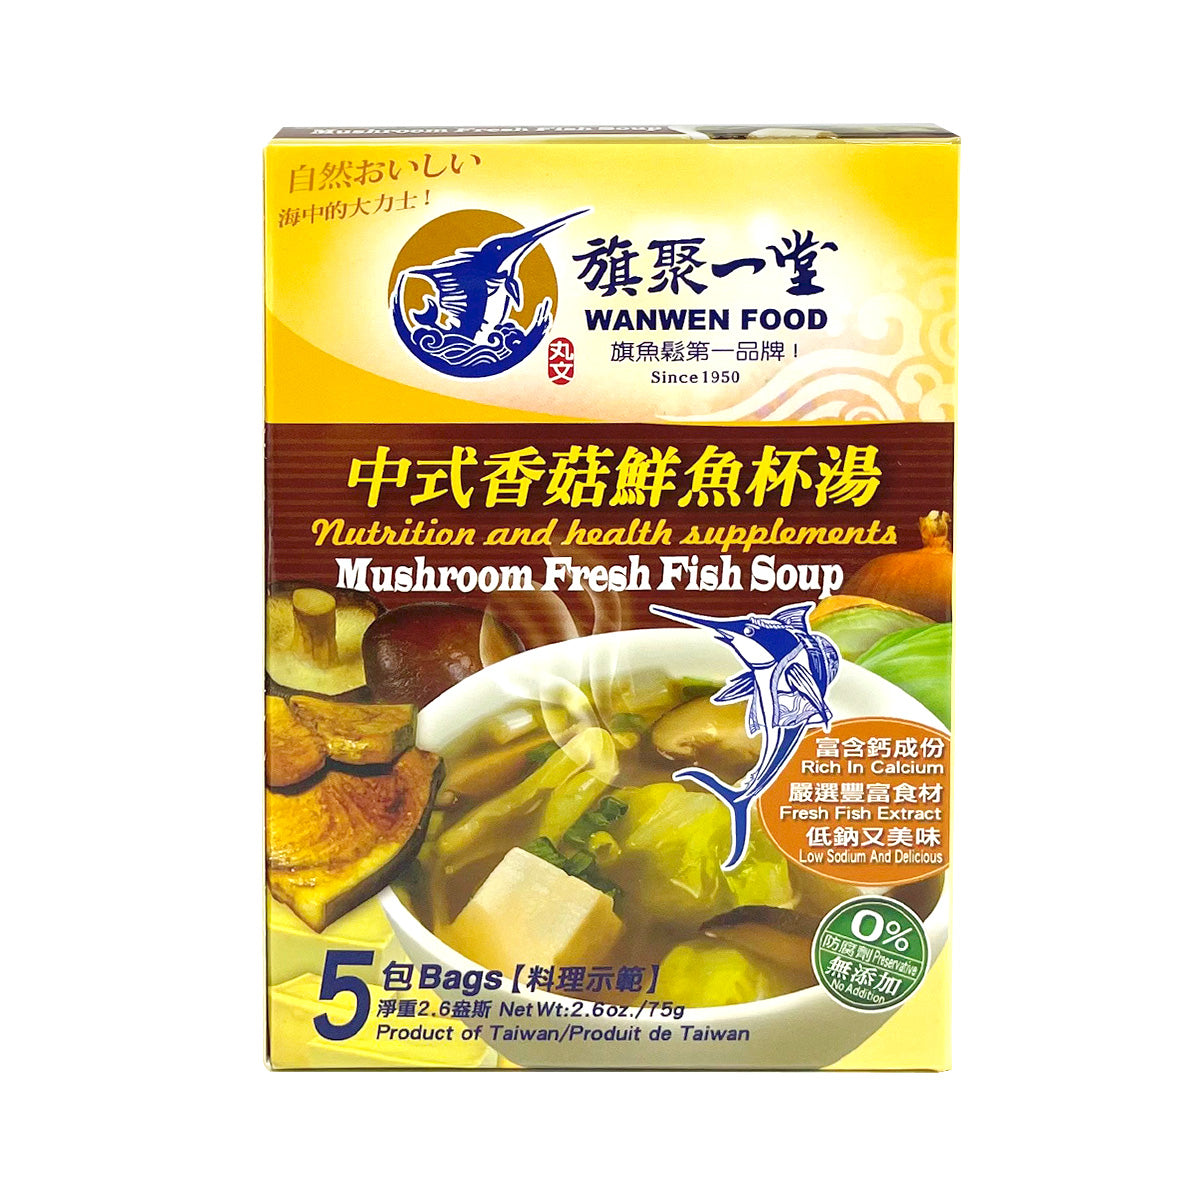 【WAN WEN】Mushroom Fresh Fish Soup 75g 5pcs